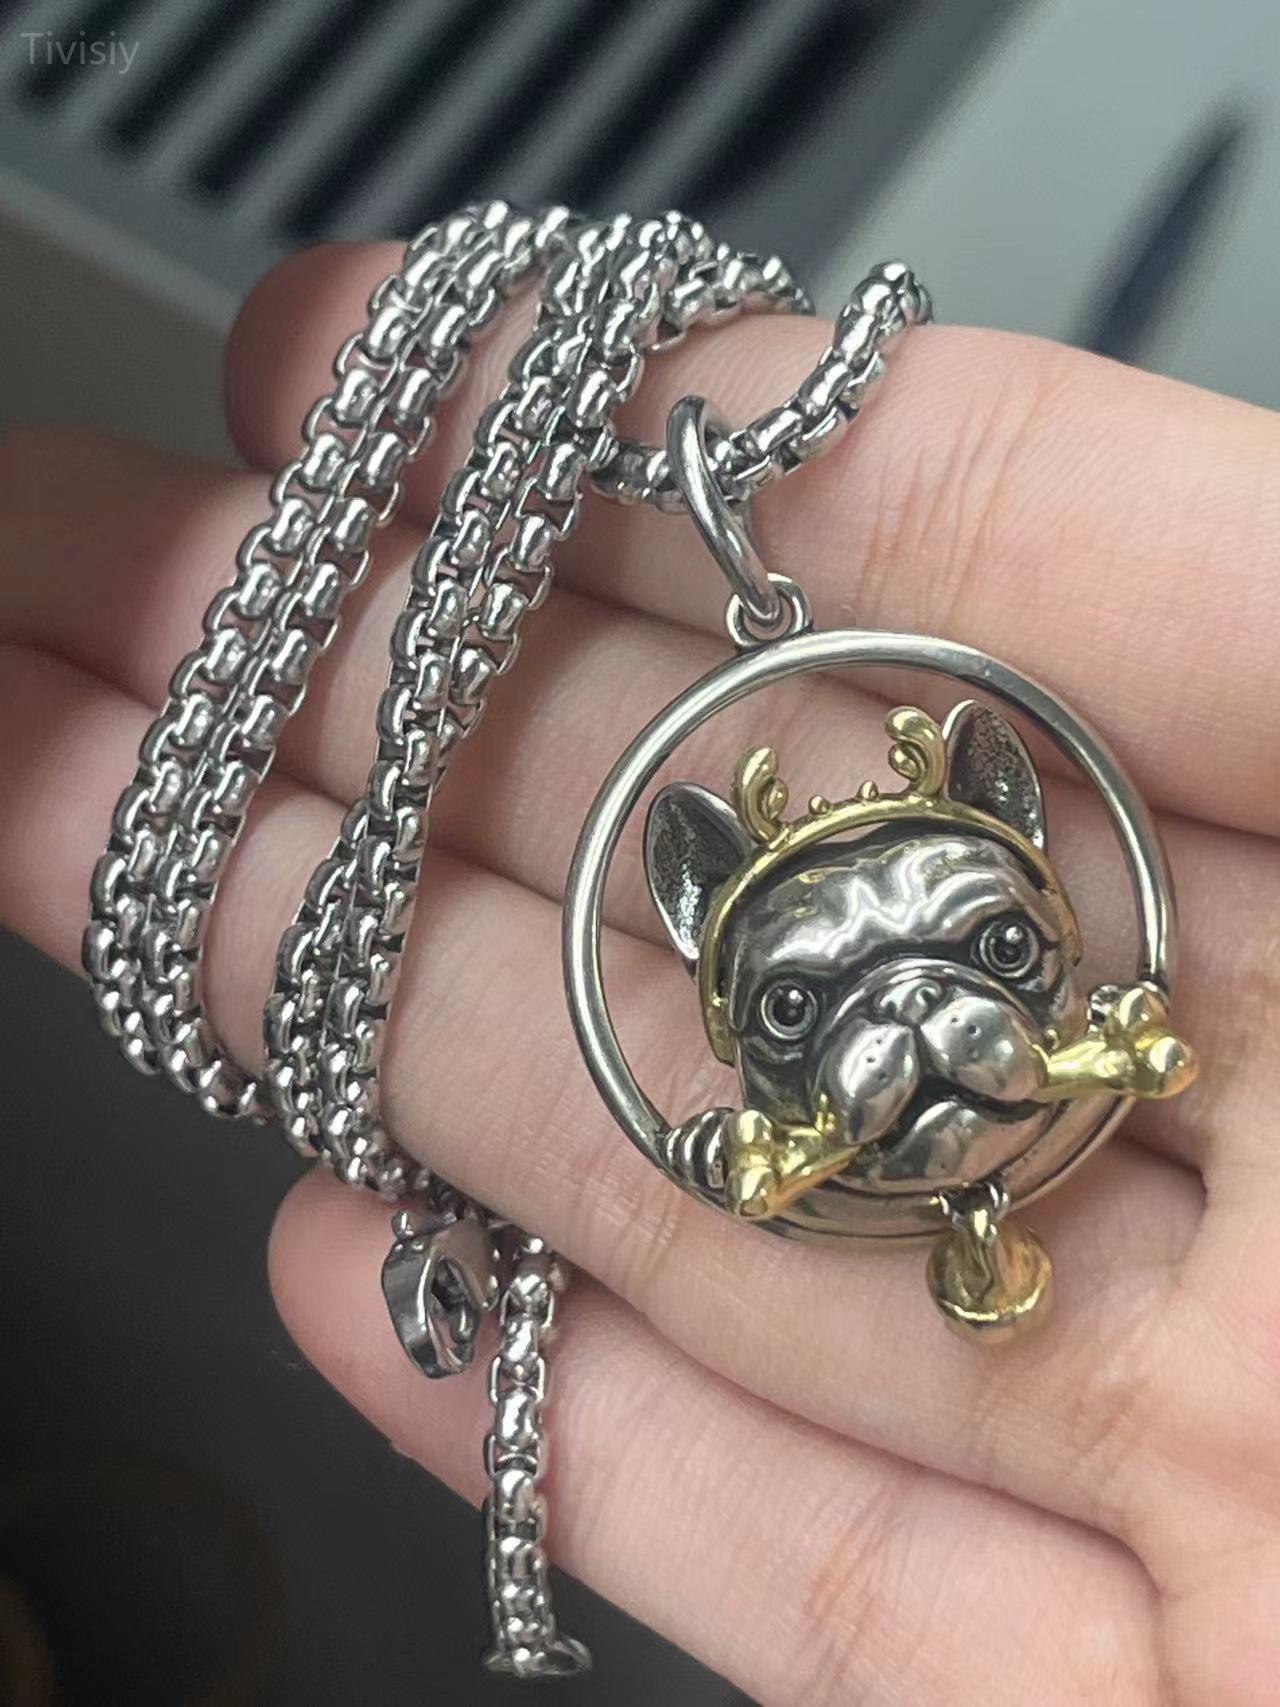 Bulldog necklace pendant, send family, friends gifts, creative pendants.